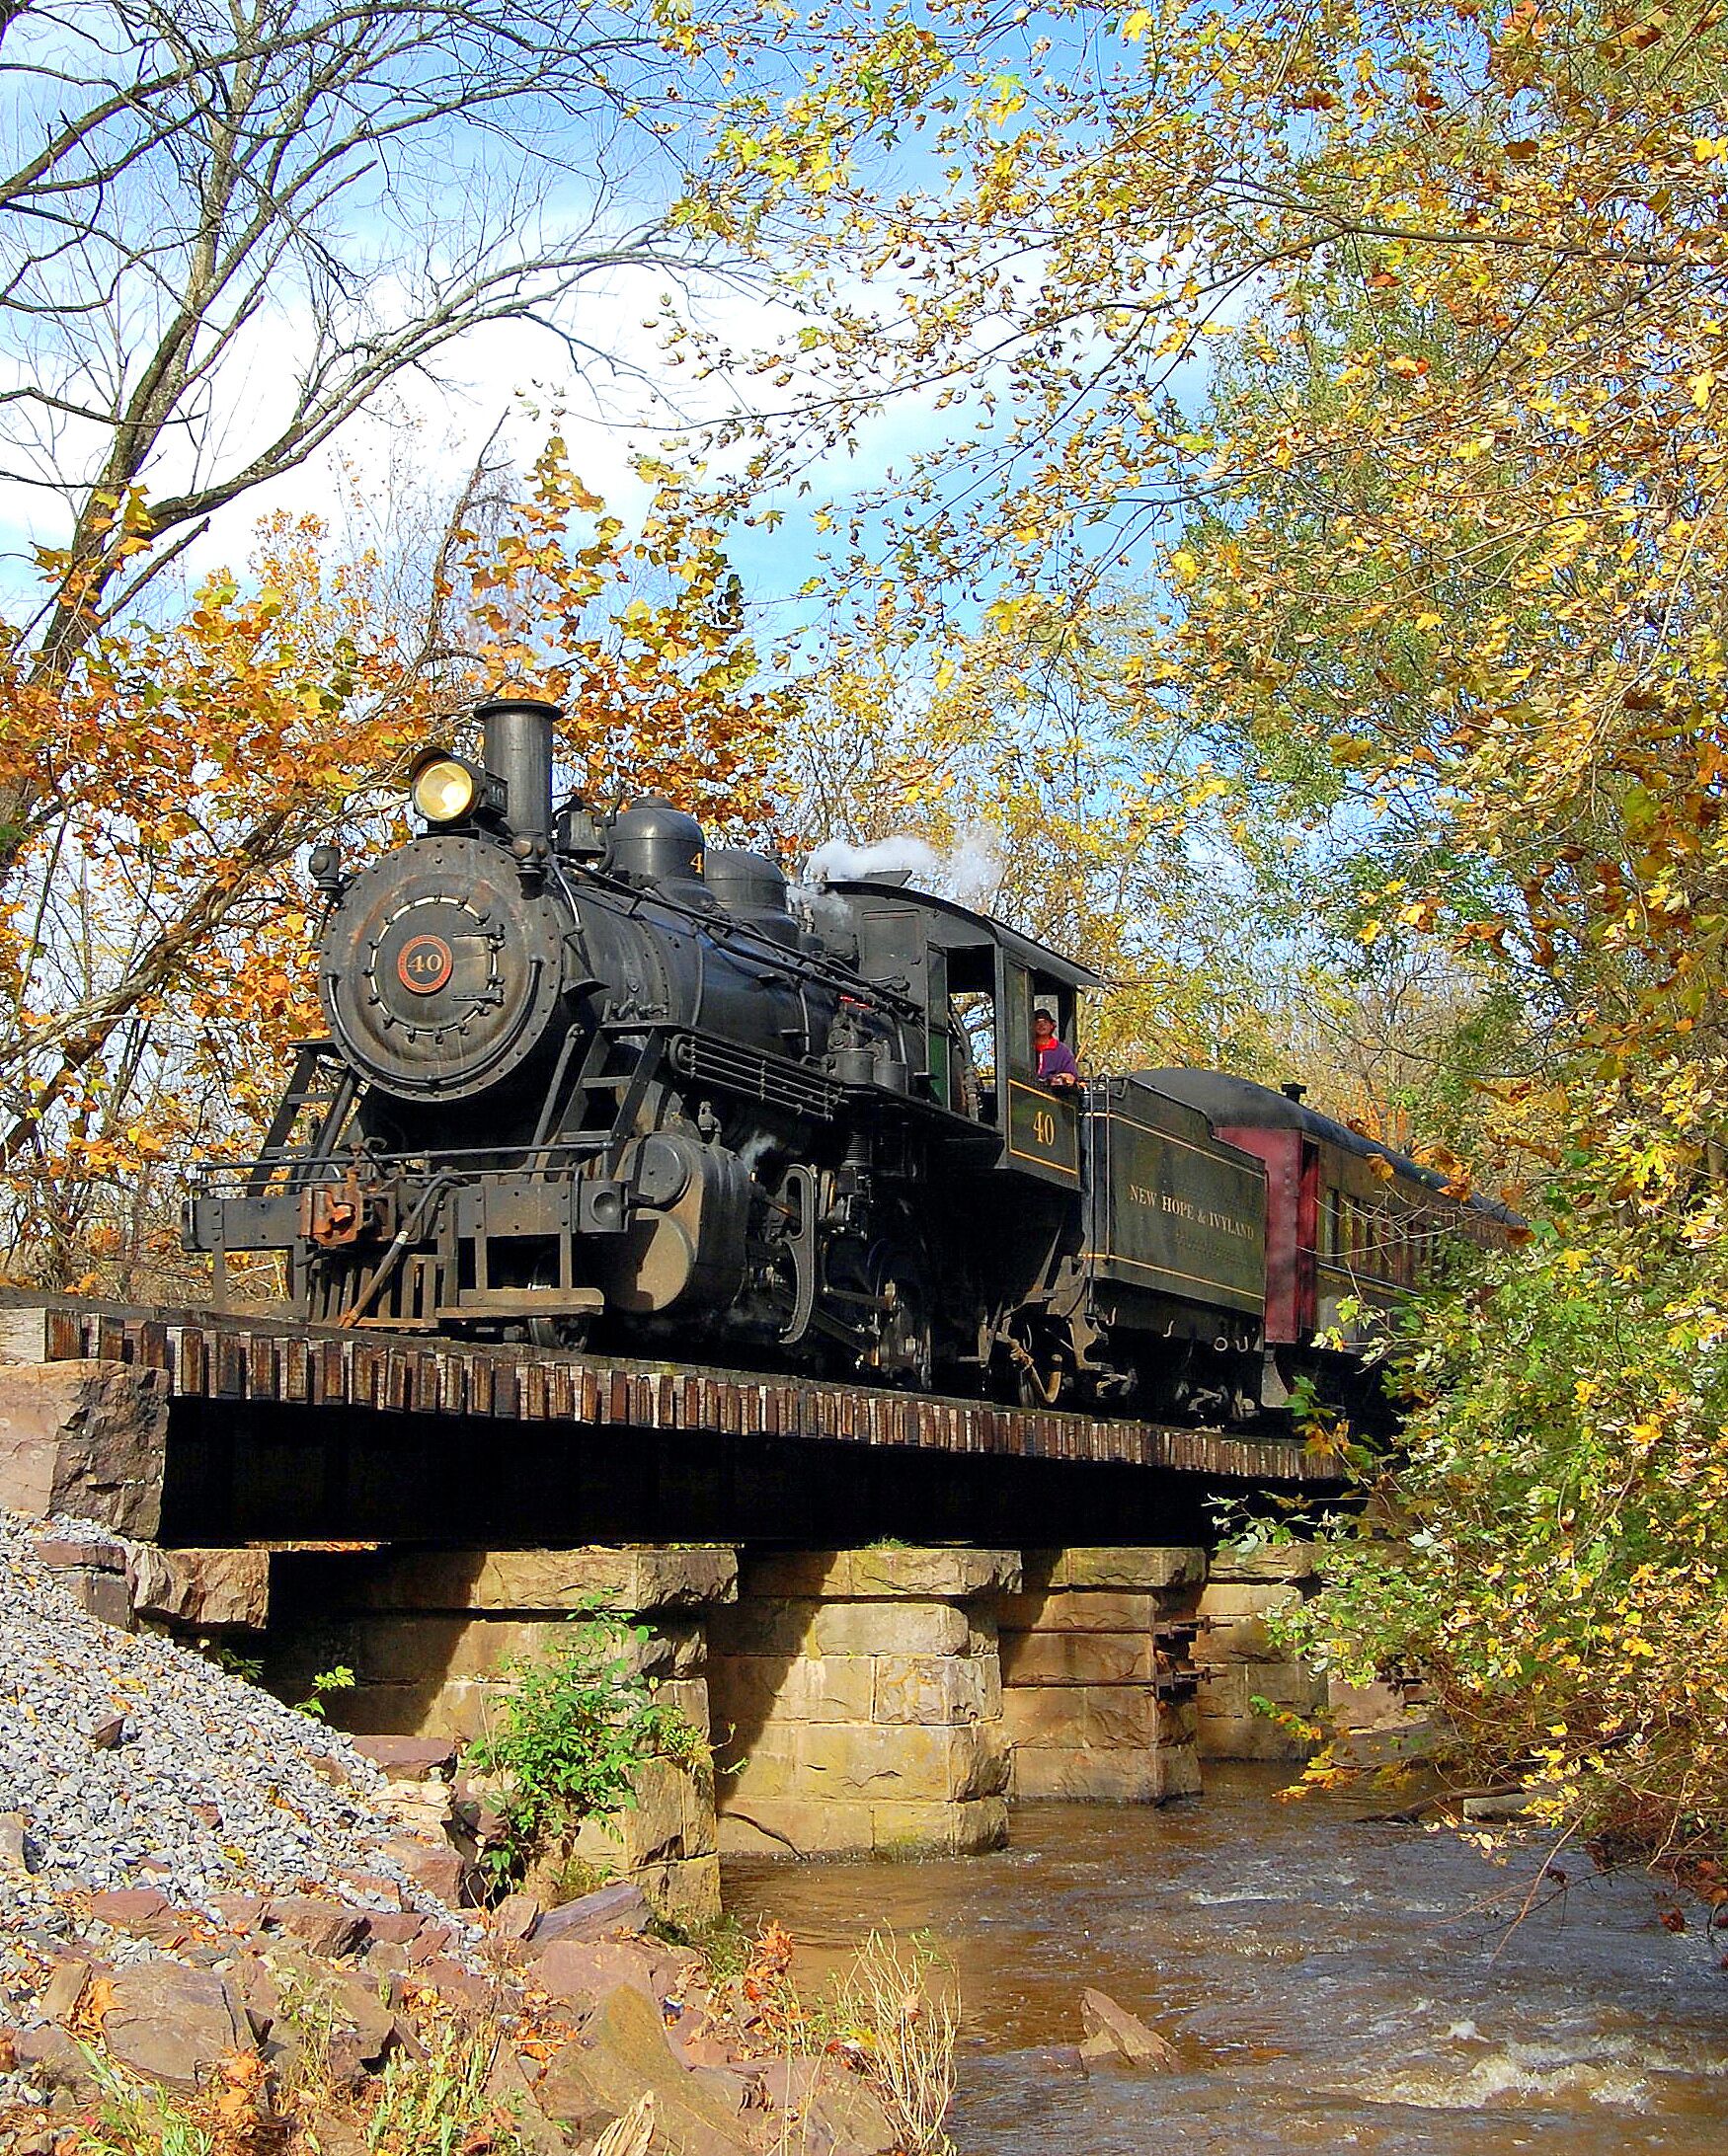 The train at New Hope & Ivyland Railroad